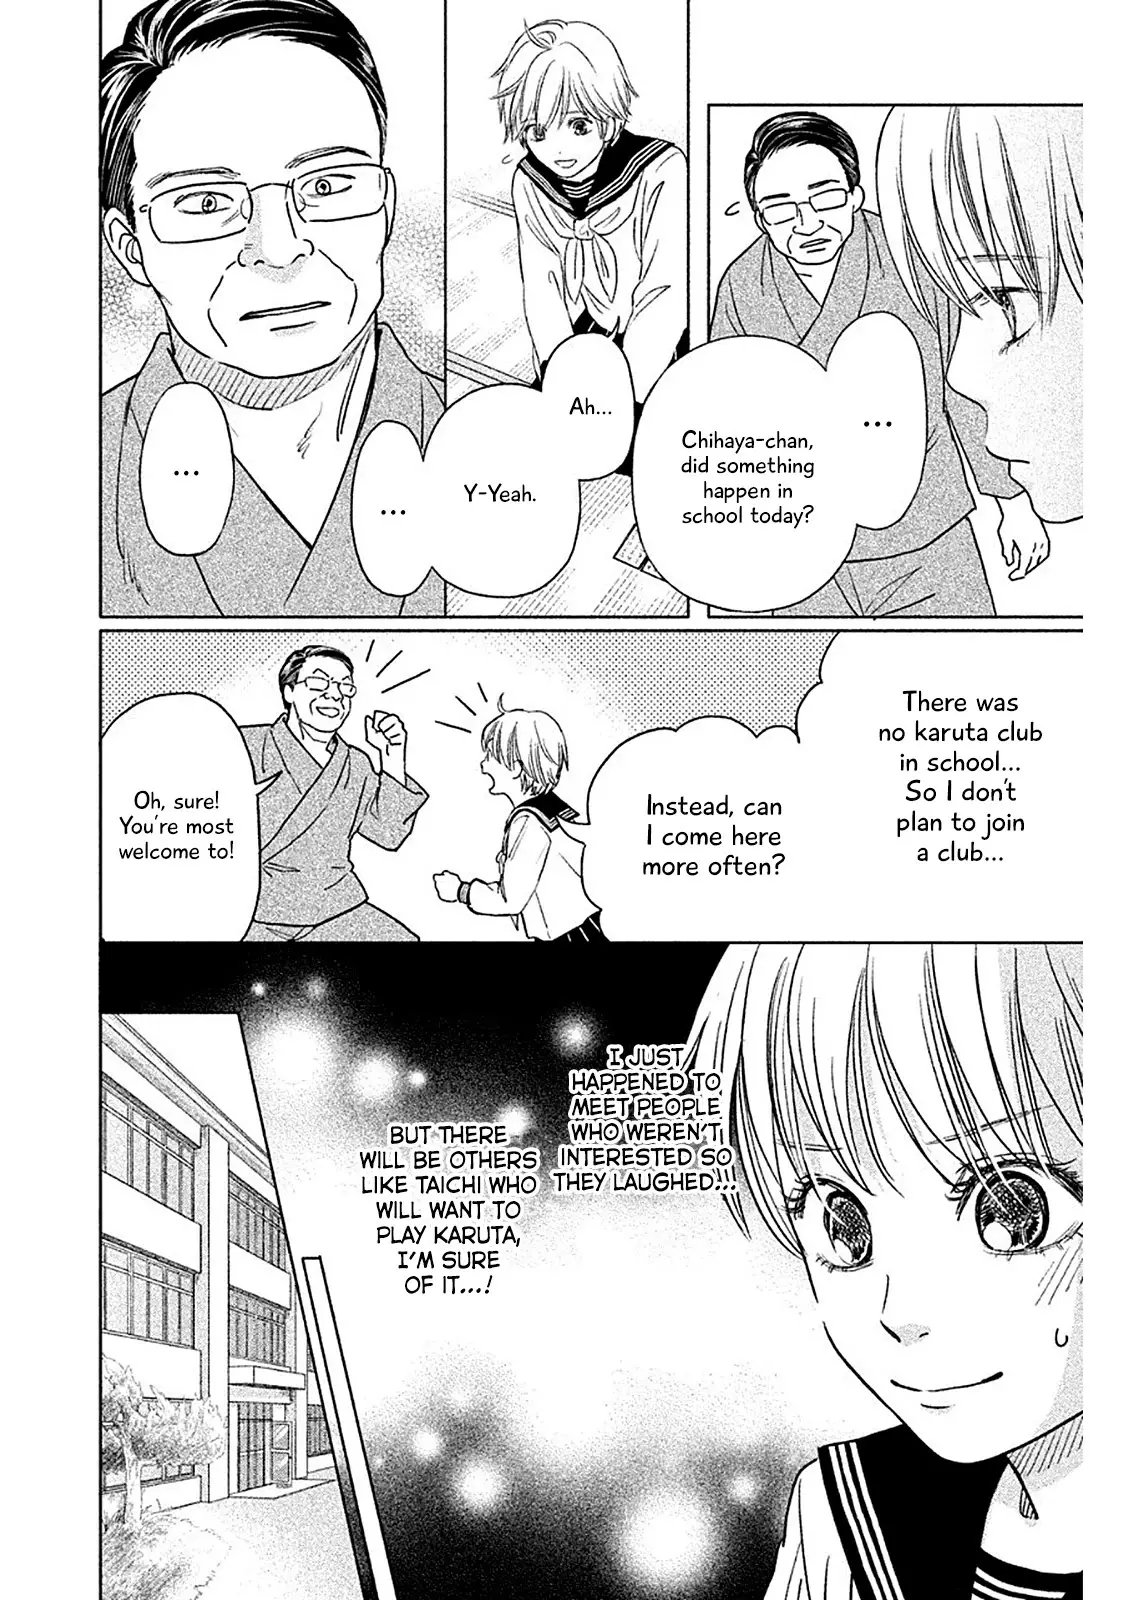 Chihayafuru: Middle School Arc - 1 page 10